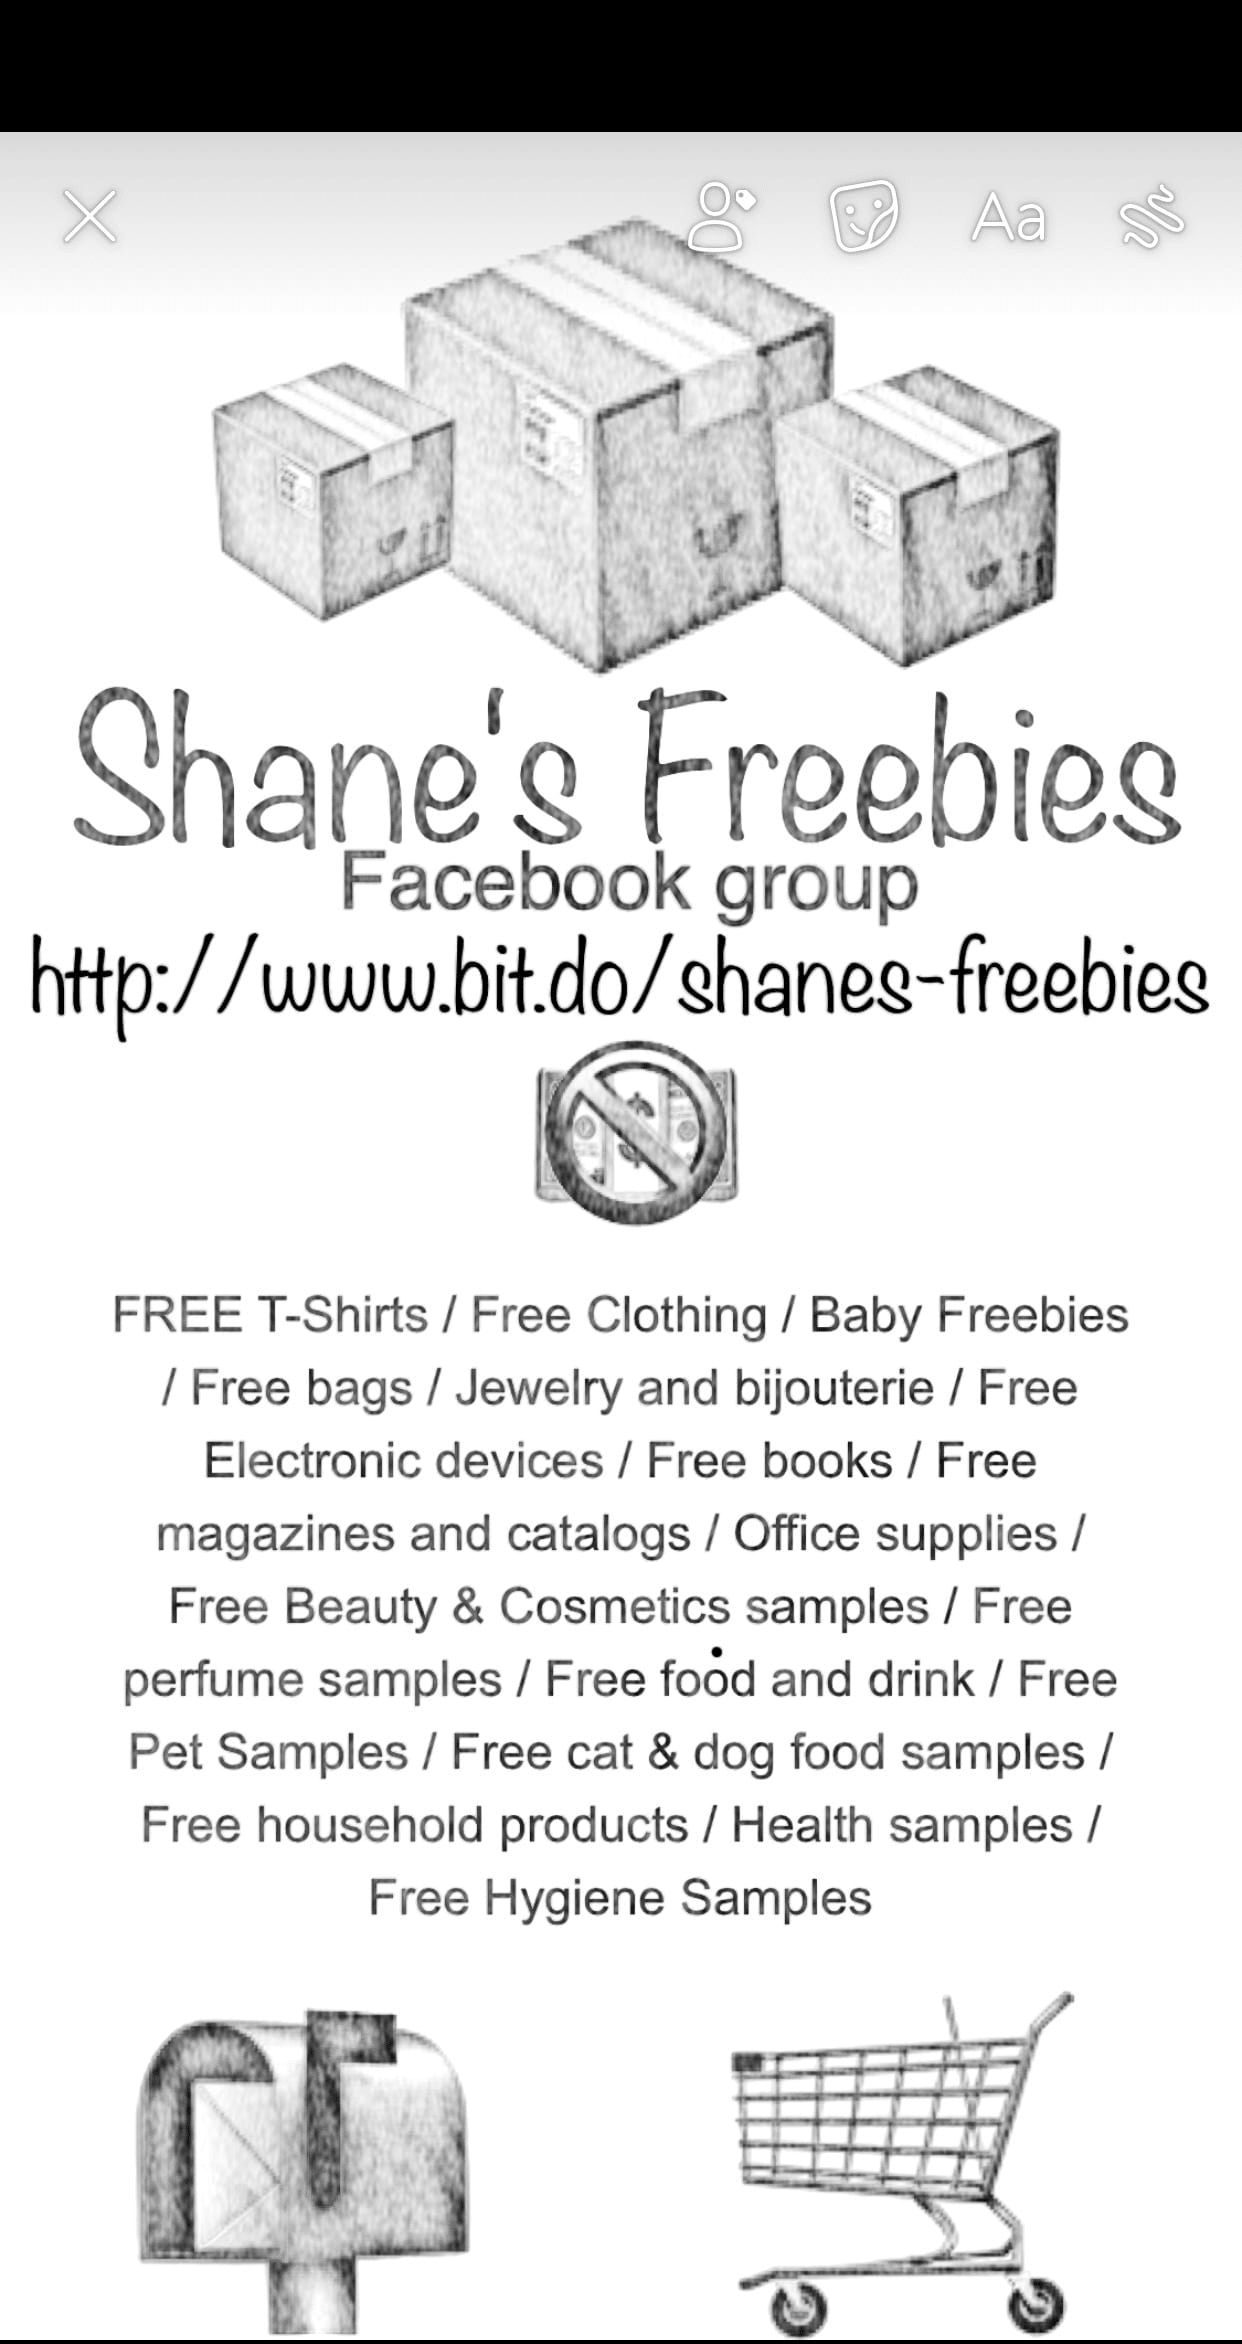 Shane's Freebies